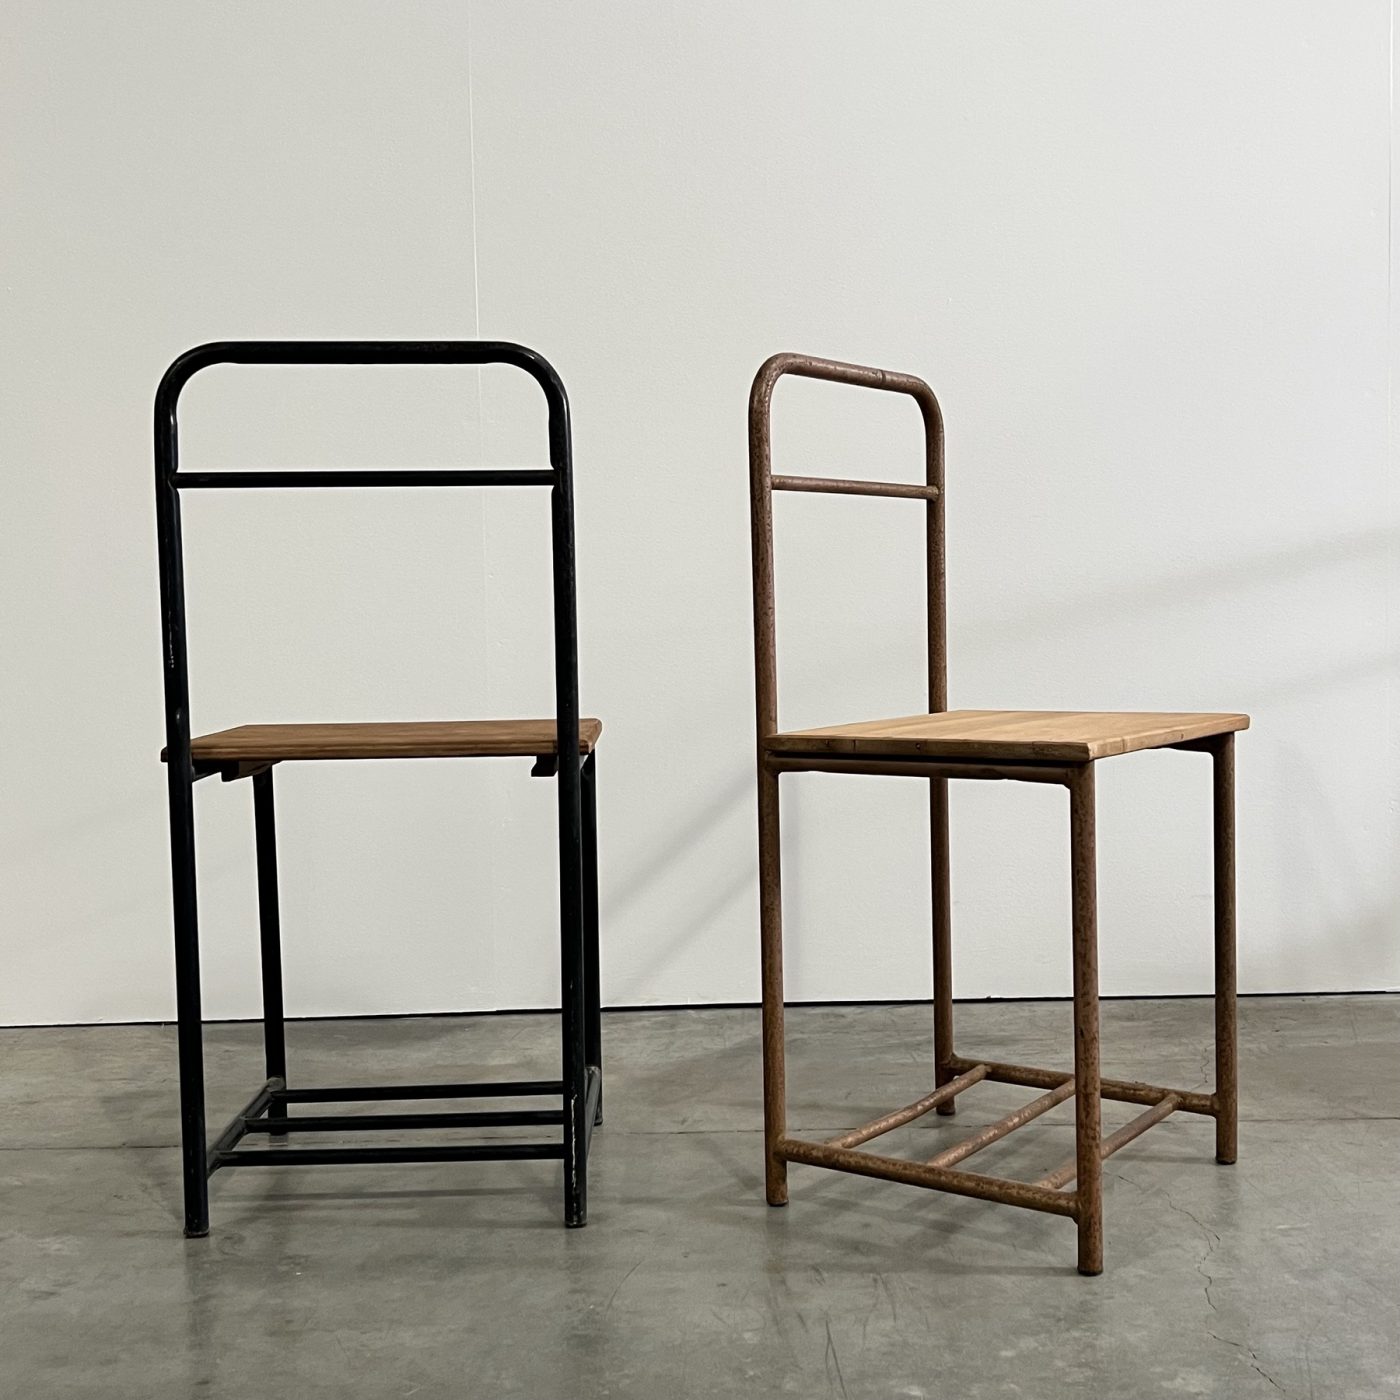 objet-vagabond-metal-chairs0000